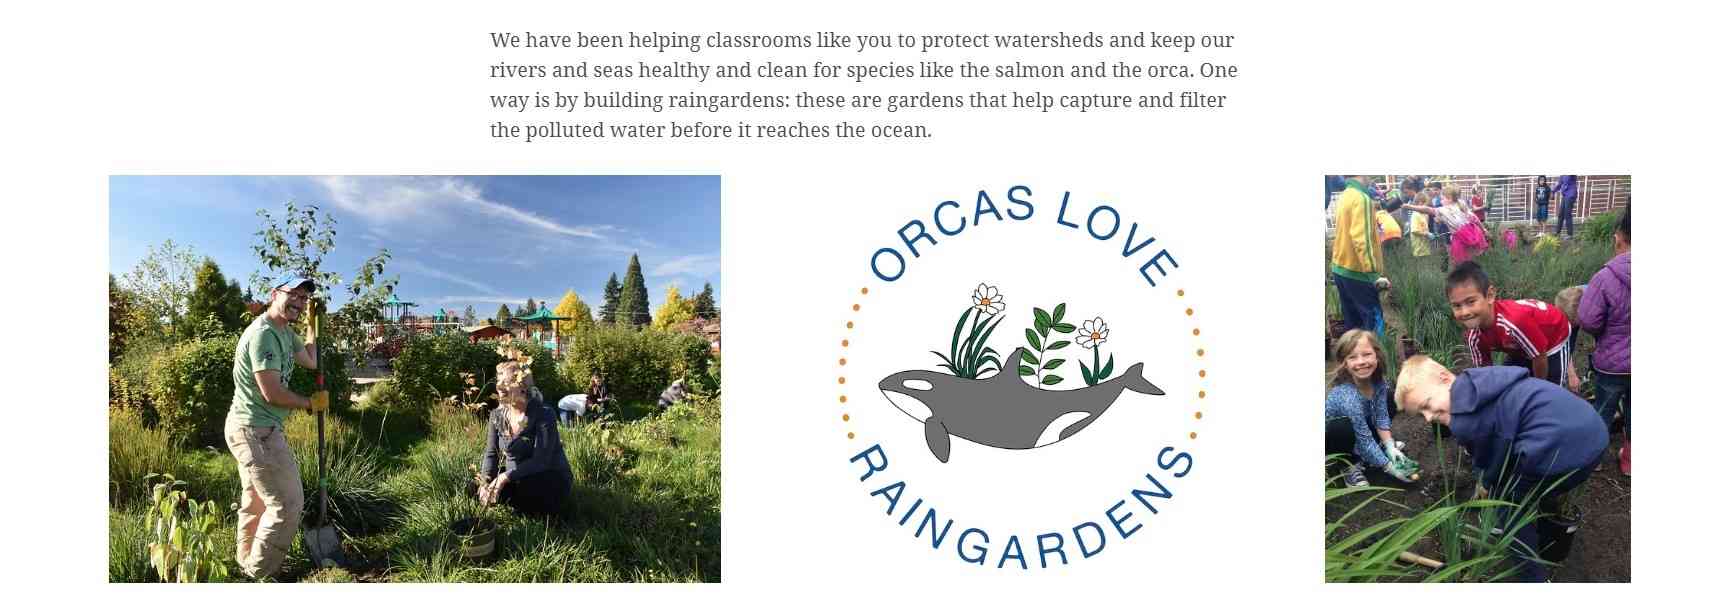 Orcas love raingardens storymap screenshot